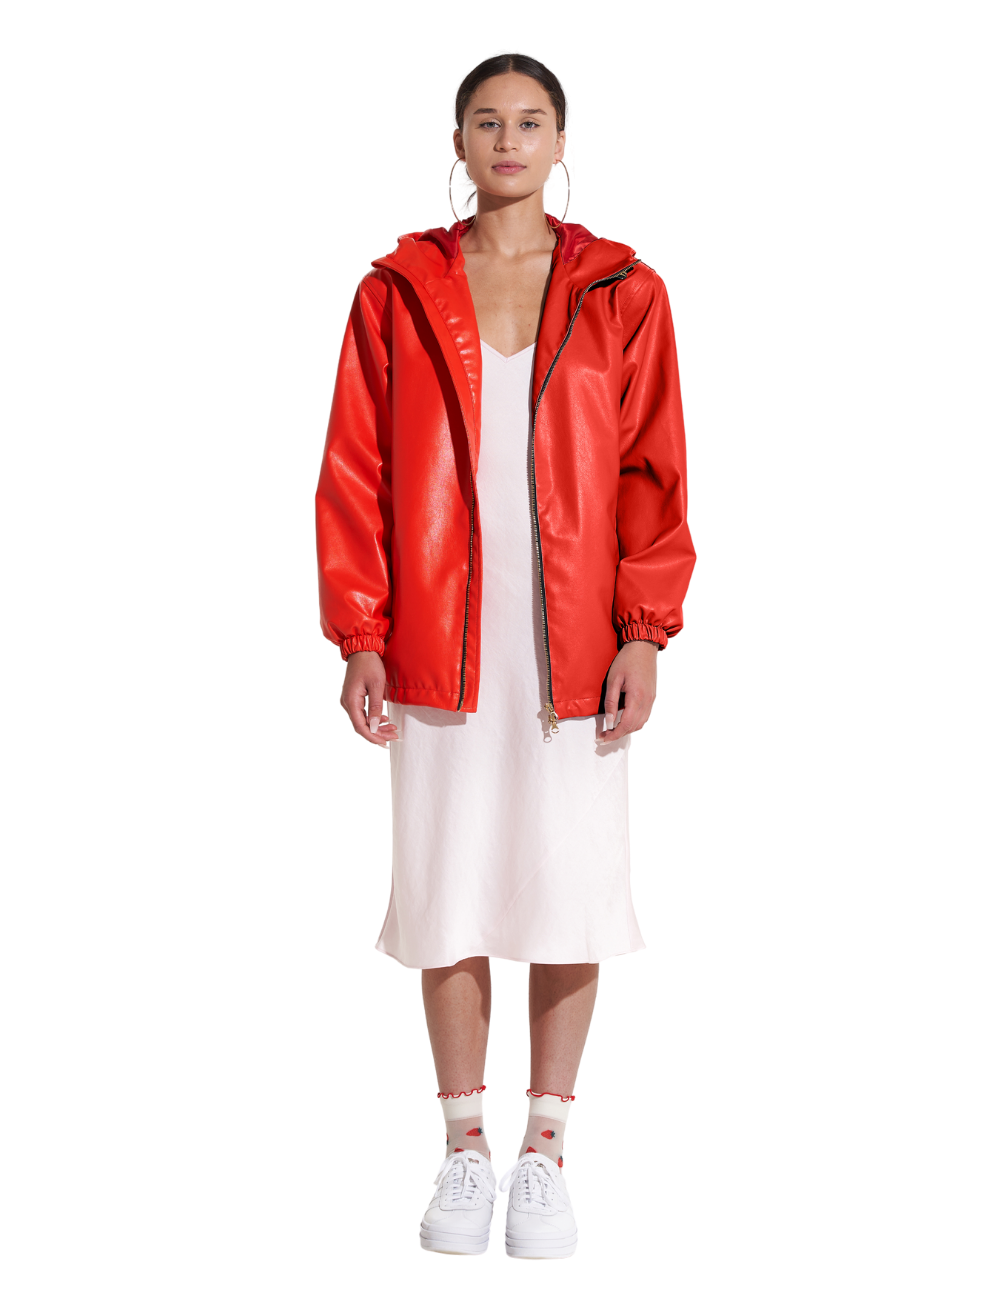 Hunter Tart Red Stylish Vegan Raincoat Made in Canada